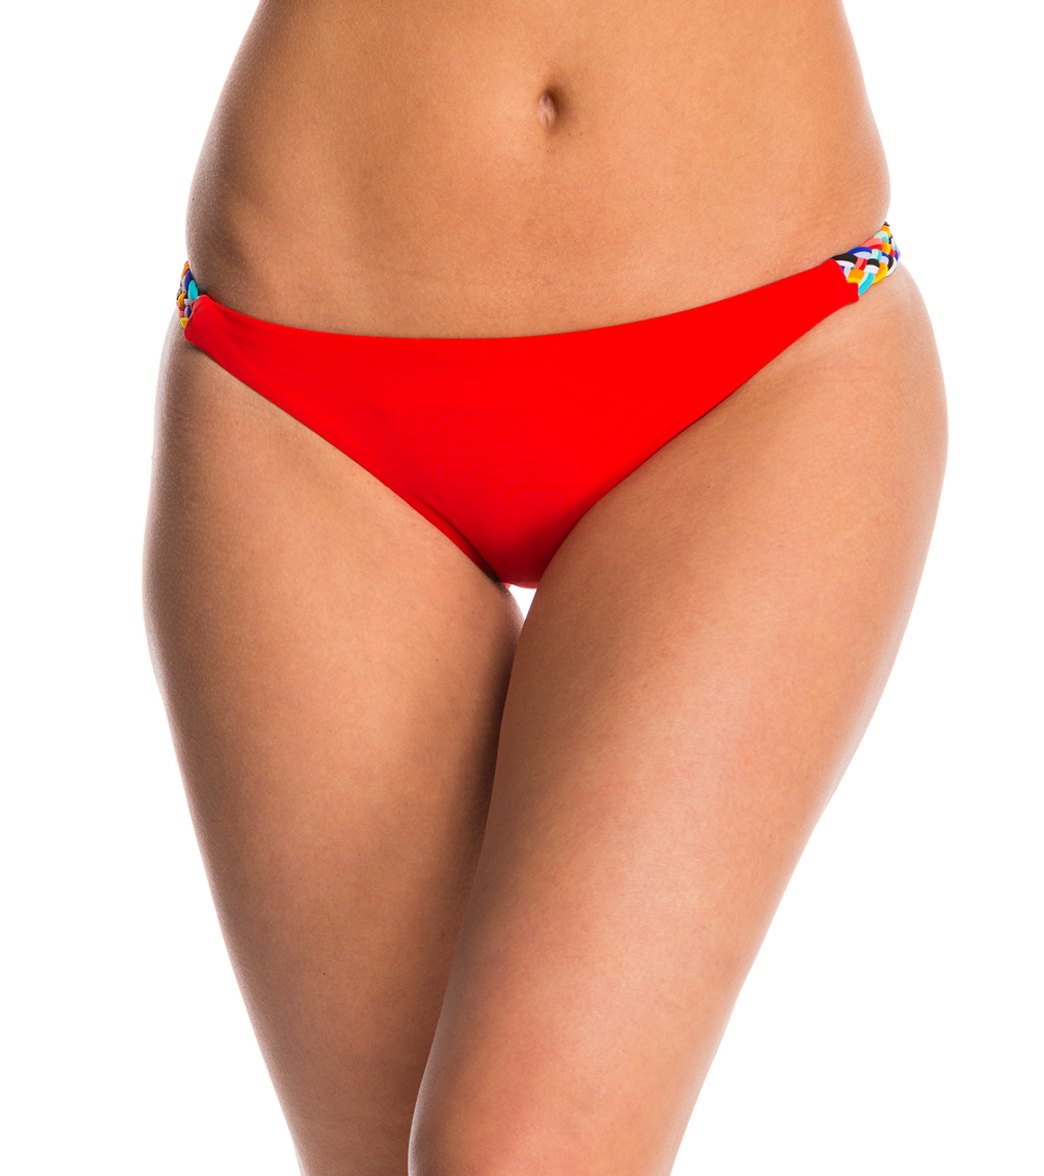 Red Carter Friendship Bracelet Classic Hipster Bikini Bottom - Summer Red Multi Large - Swimoutlet.com